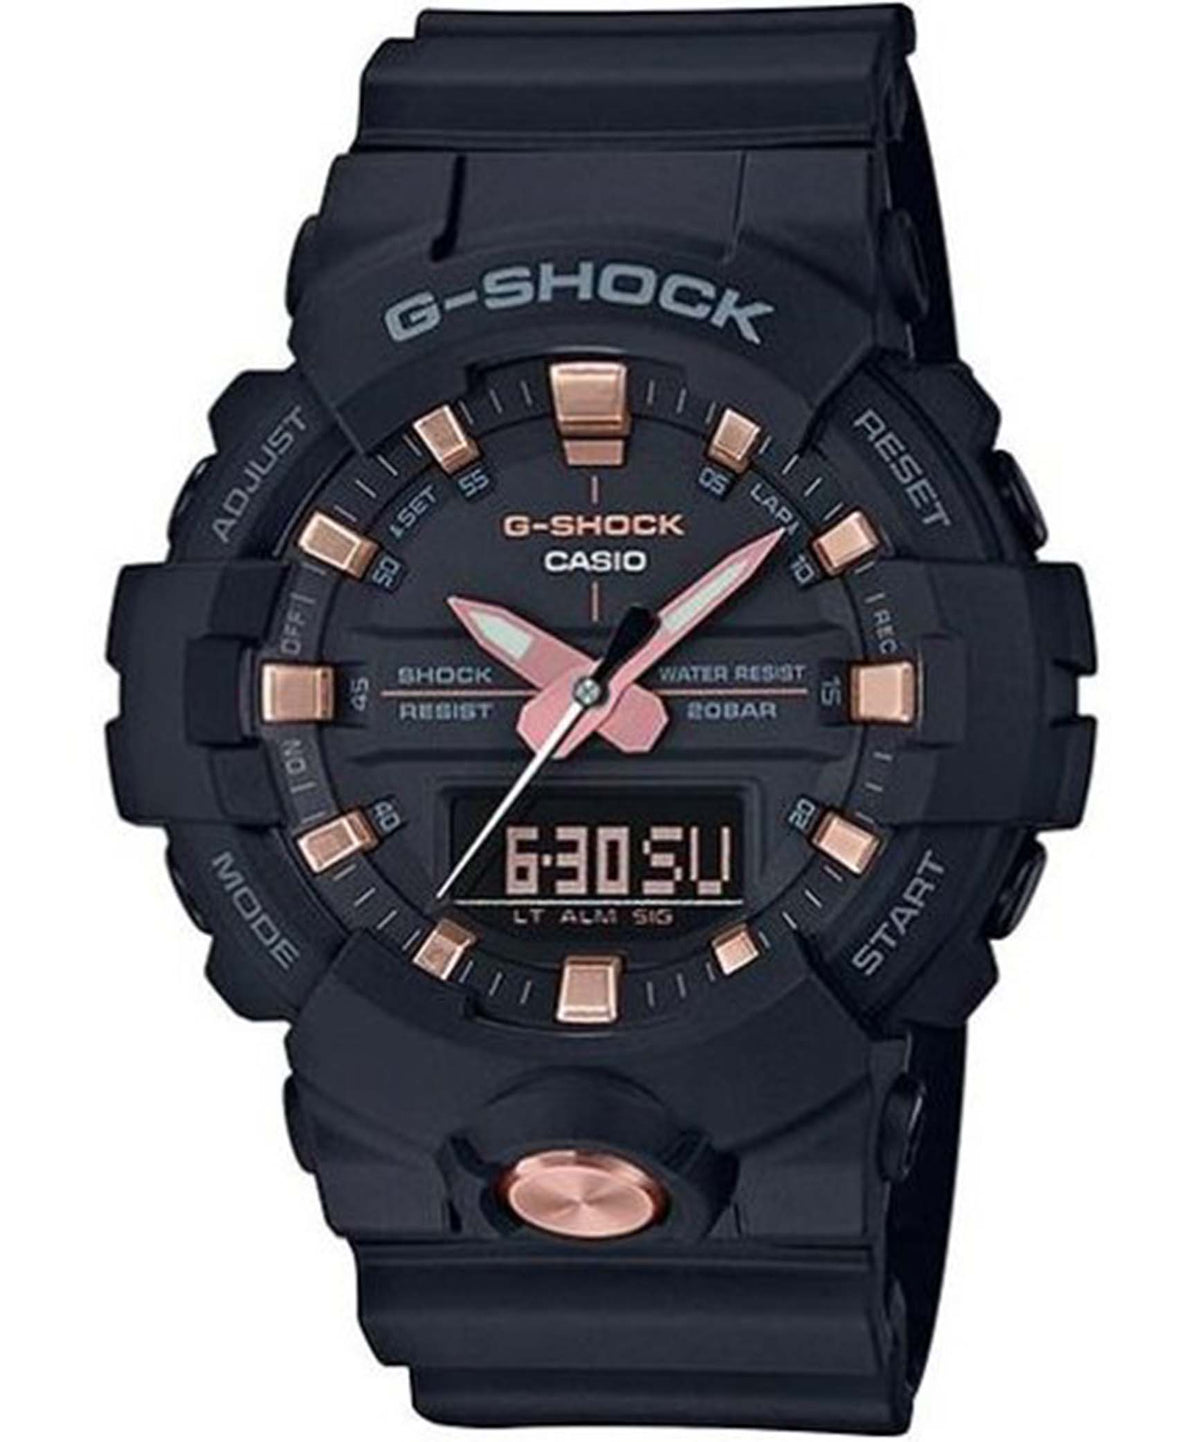 G-Shock Men's Watch Analog & Digital Combo Black & Rose Gold Dial Black Resin Band, GA-810B-1A4DR